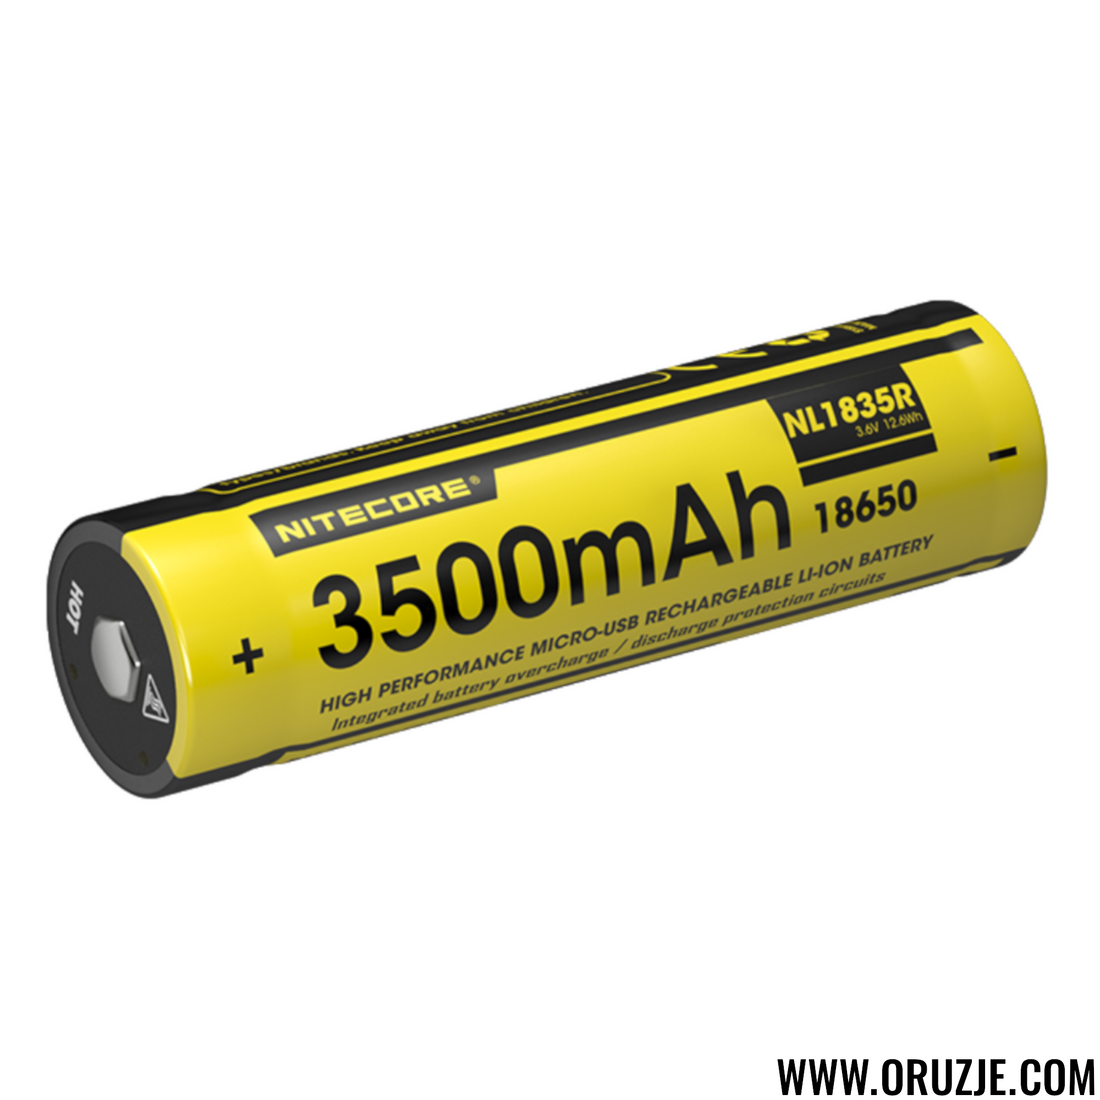 Nitecore NL1835R Baterija